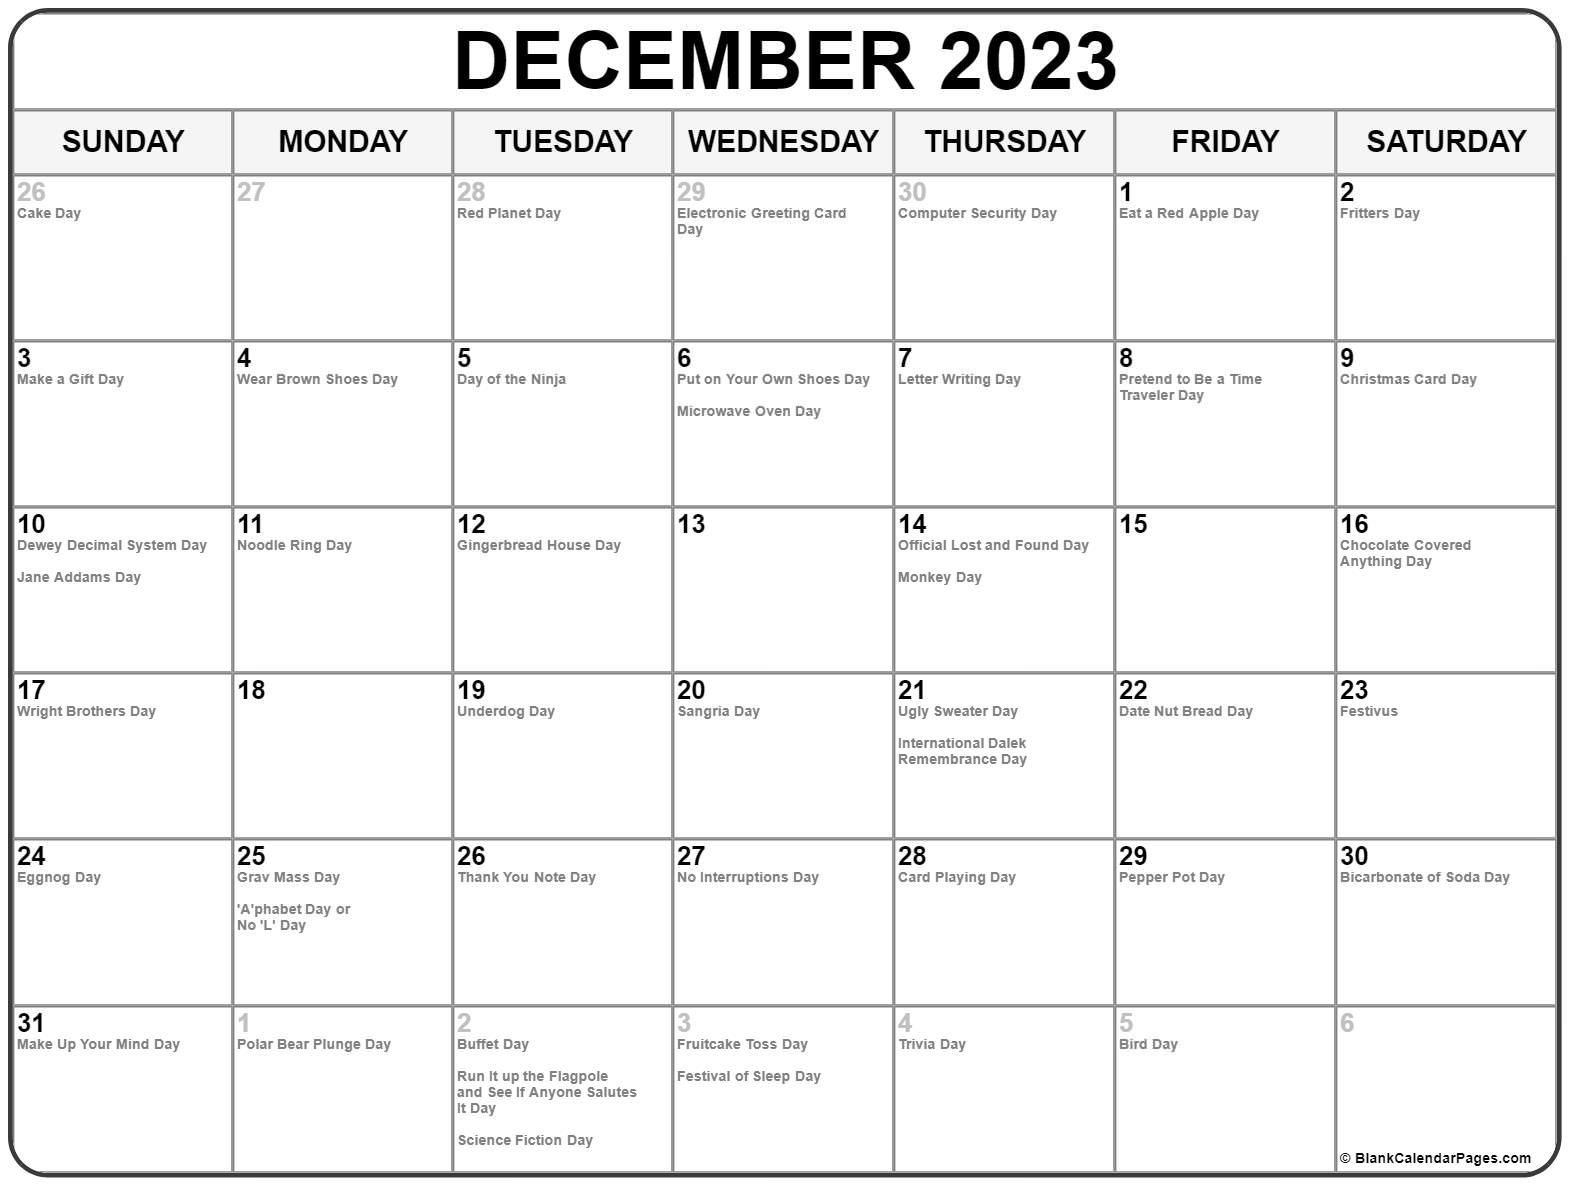 december-2023-with-holidays-calendar